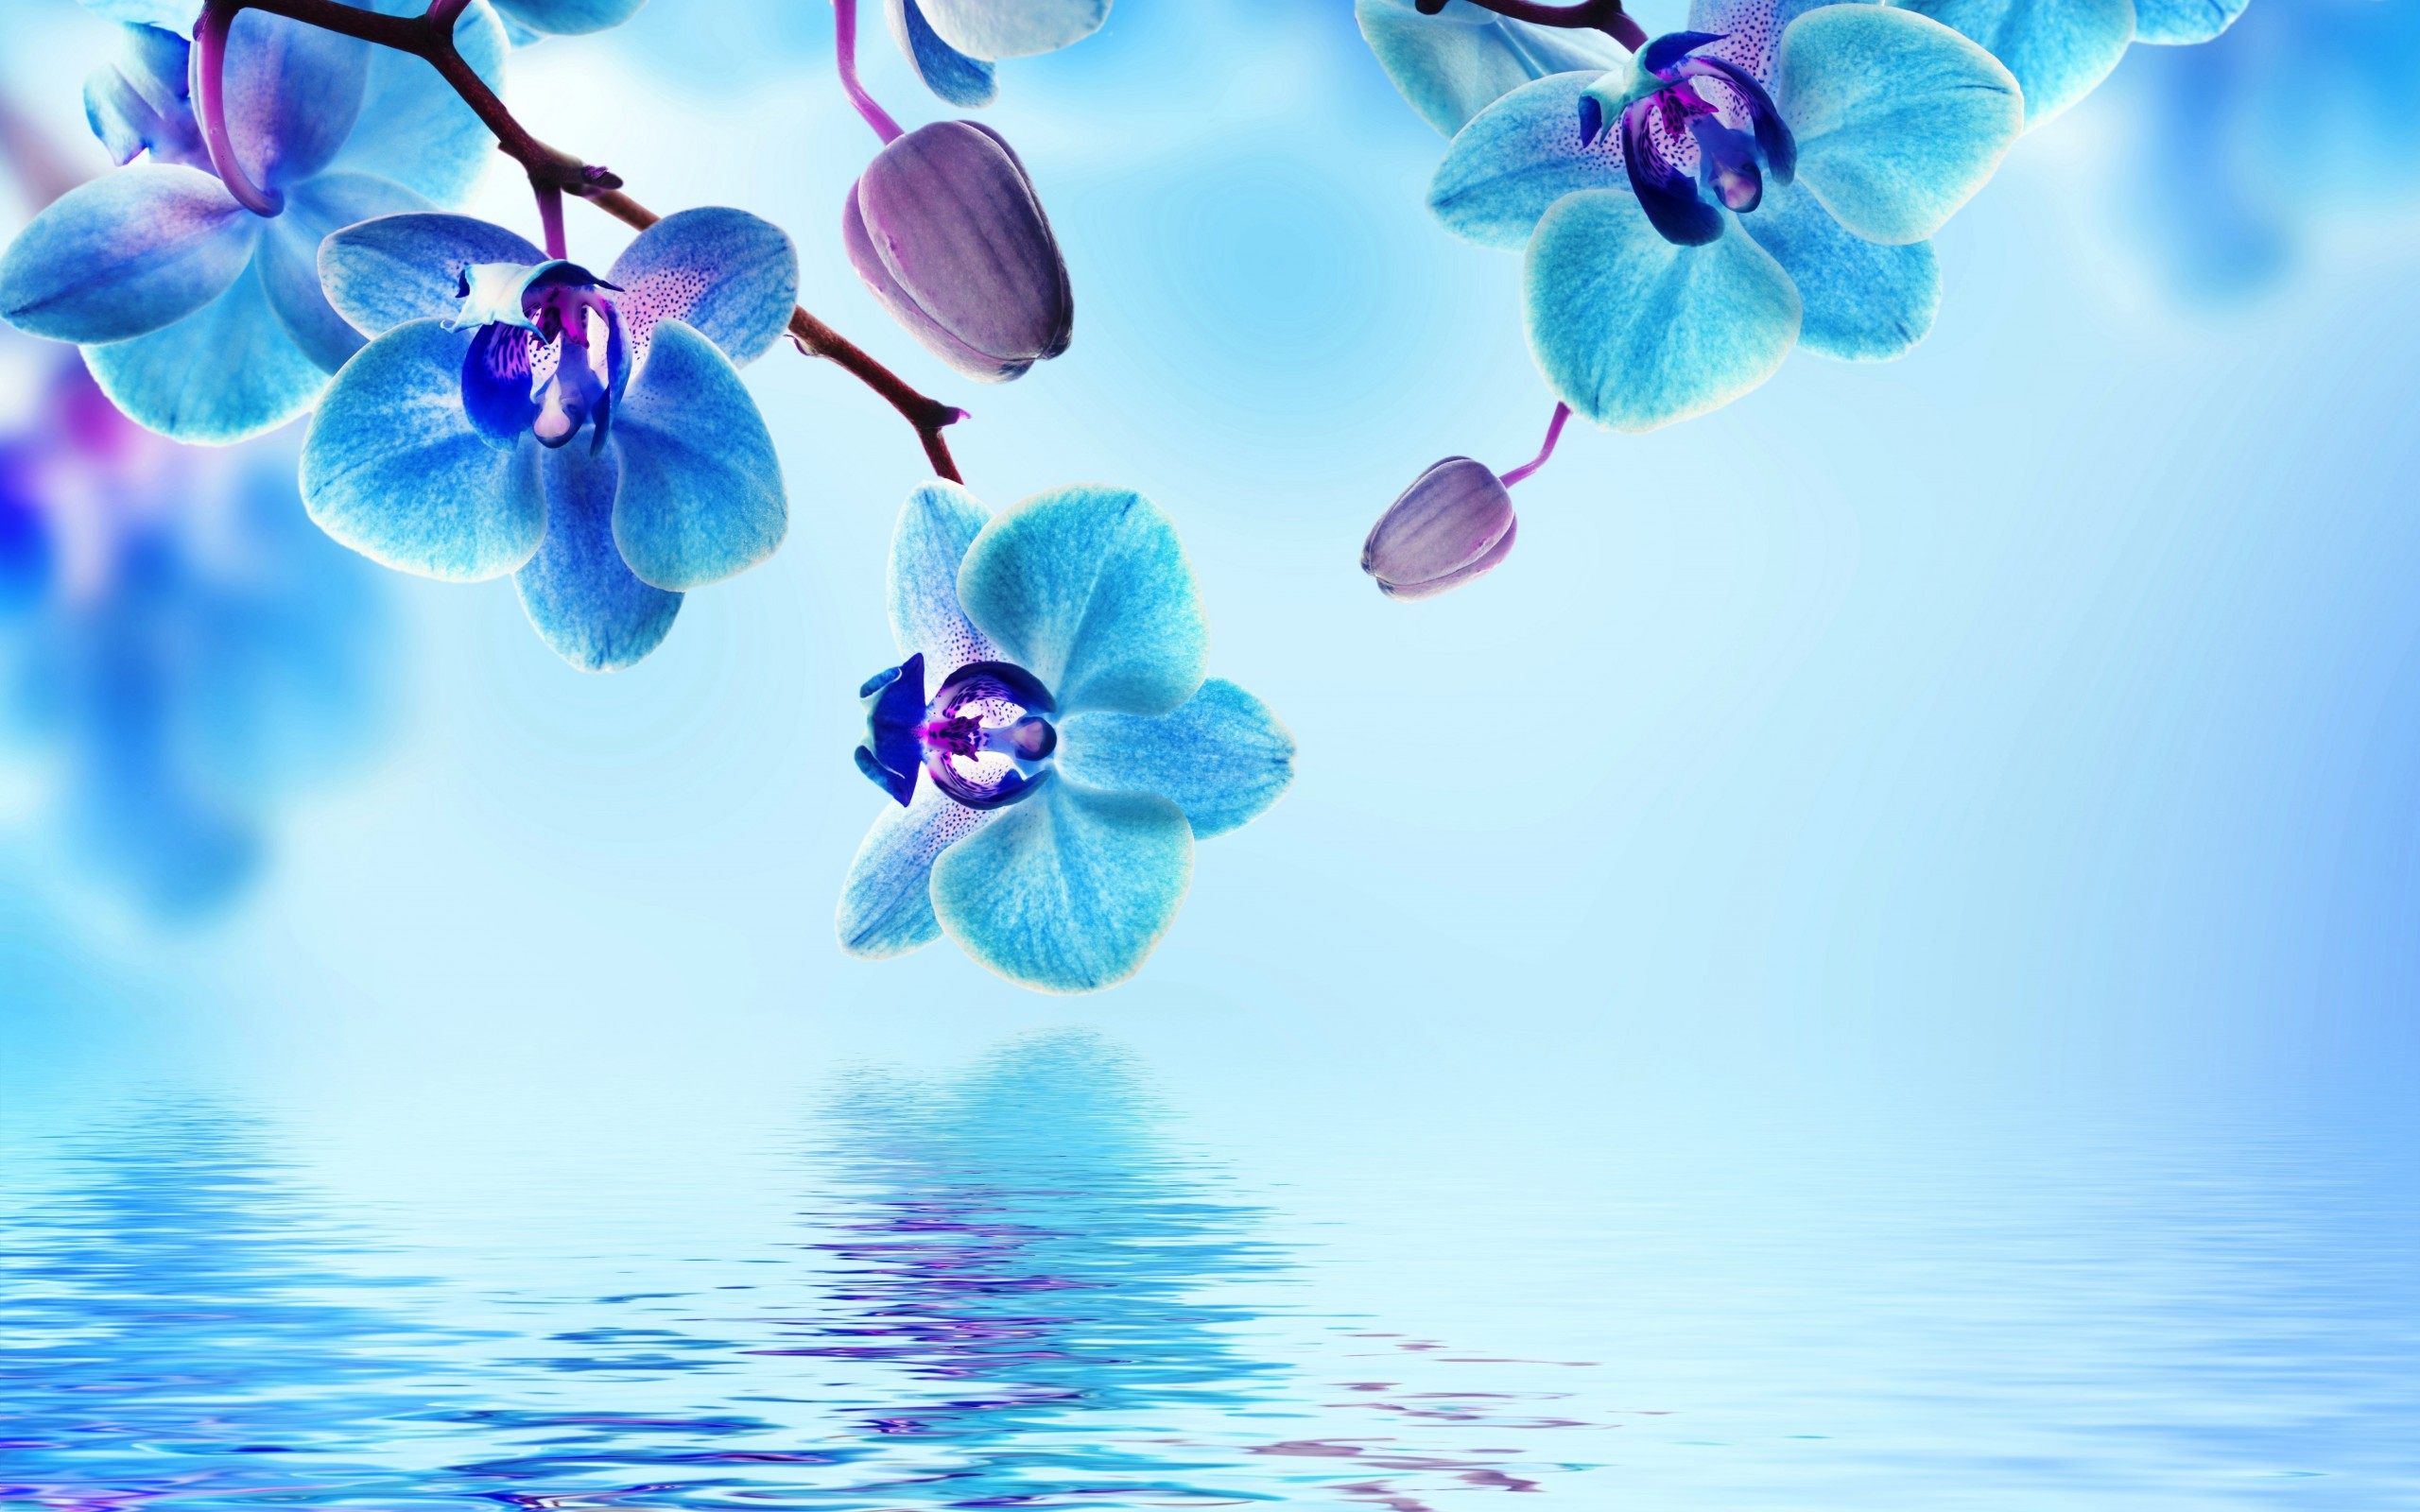 blue flower wallpaper background